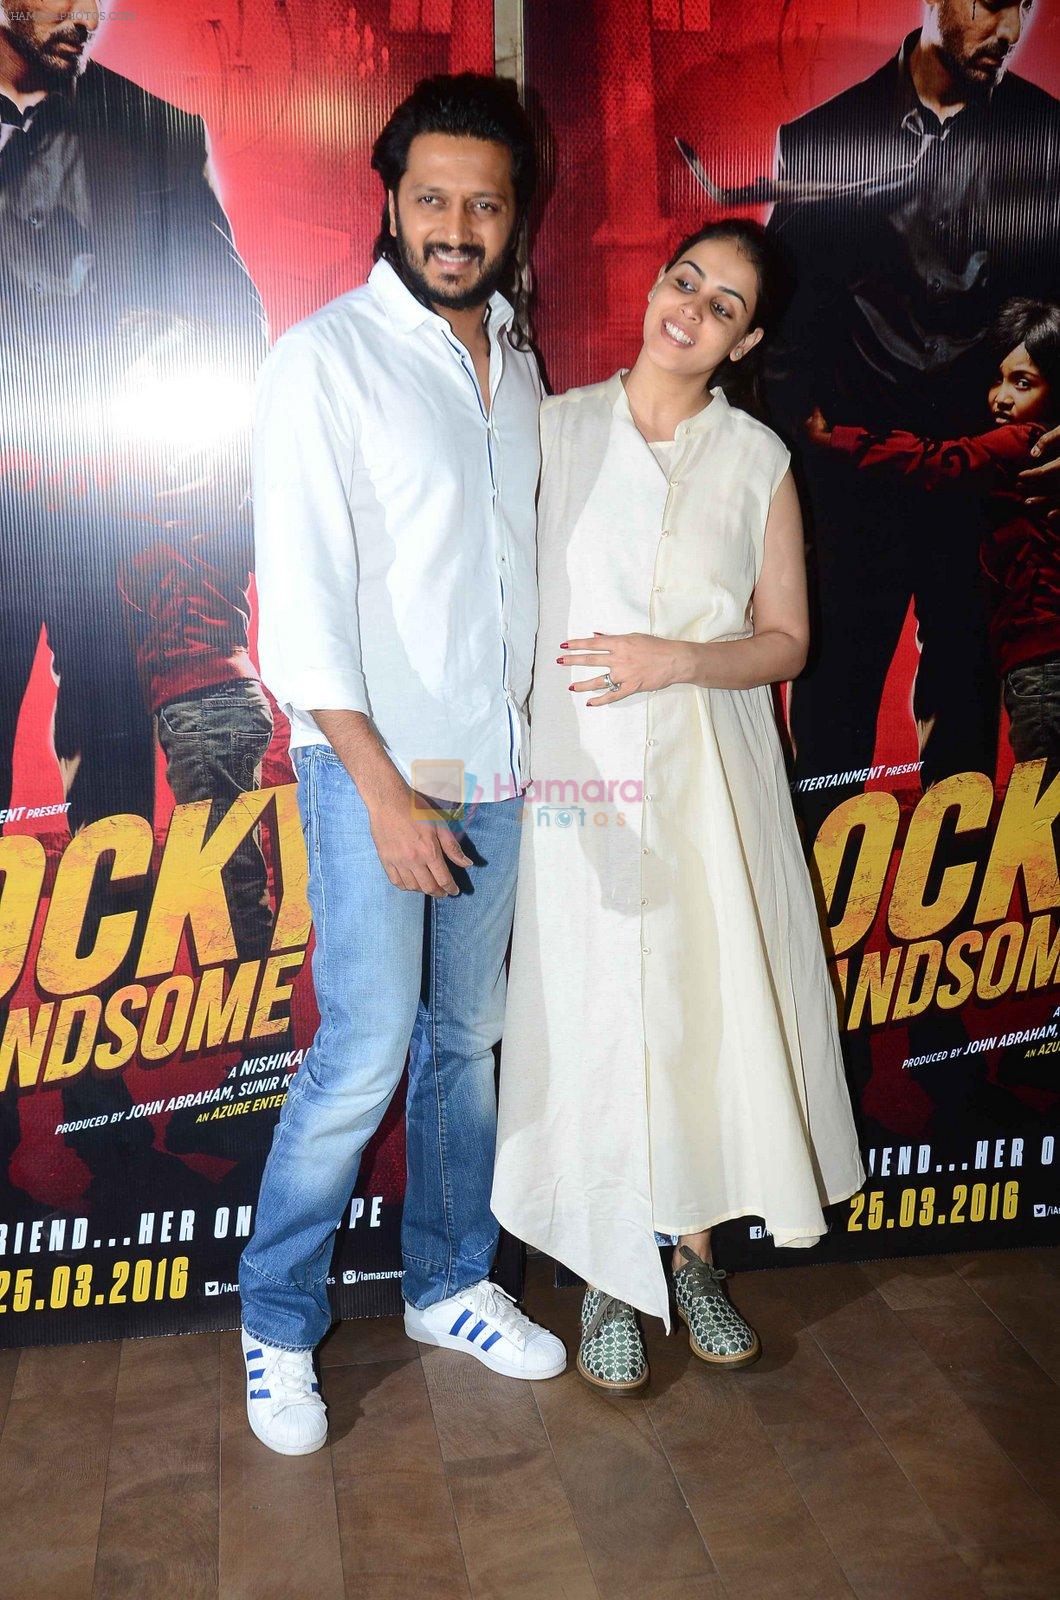 Genelia D Souza, Riteish Deshmukh at Rocky Handsome screening in Mumbai on 23rd March 2016